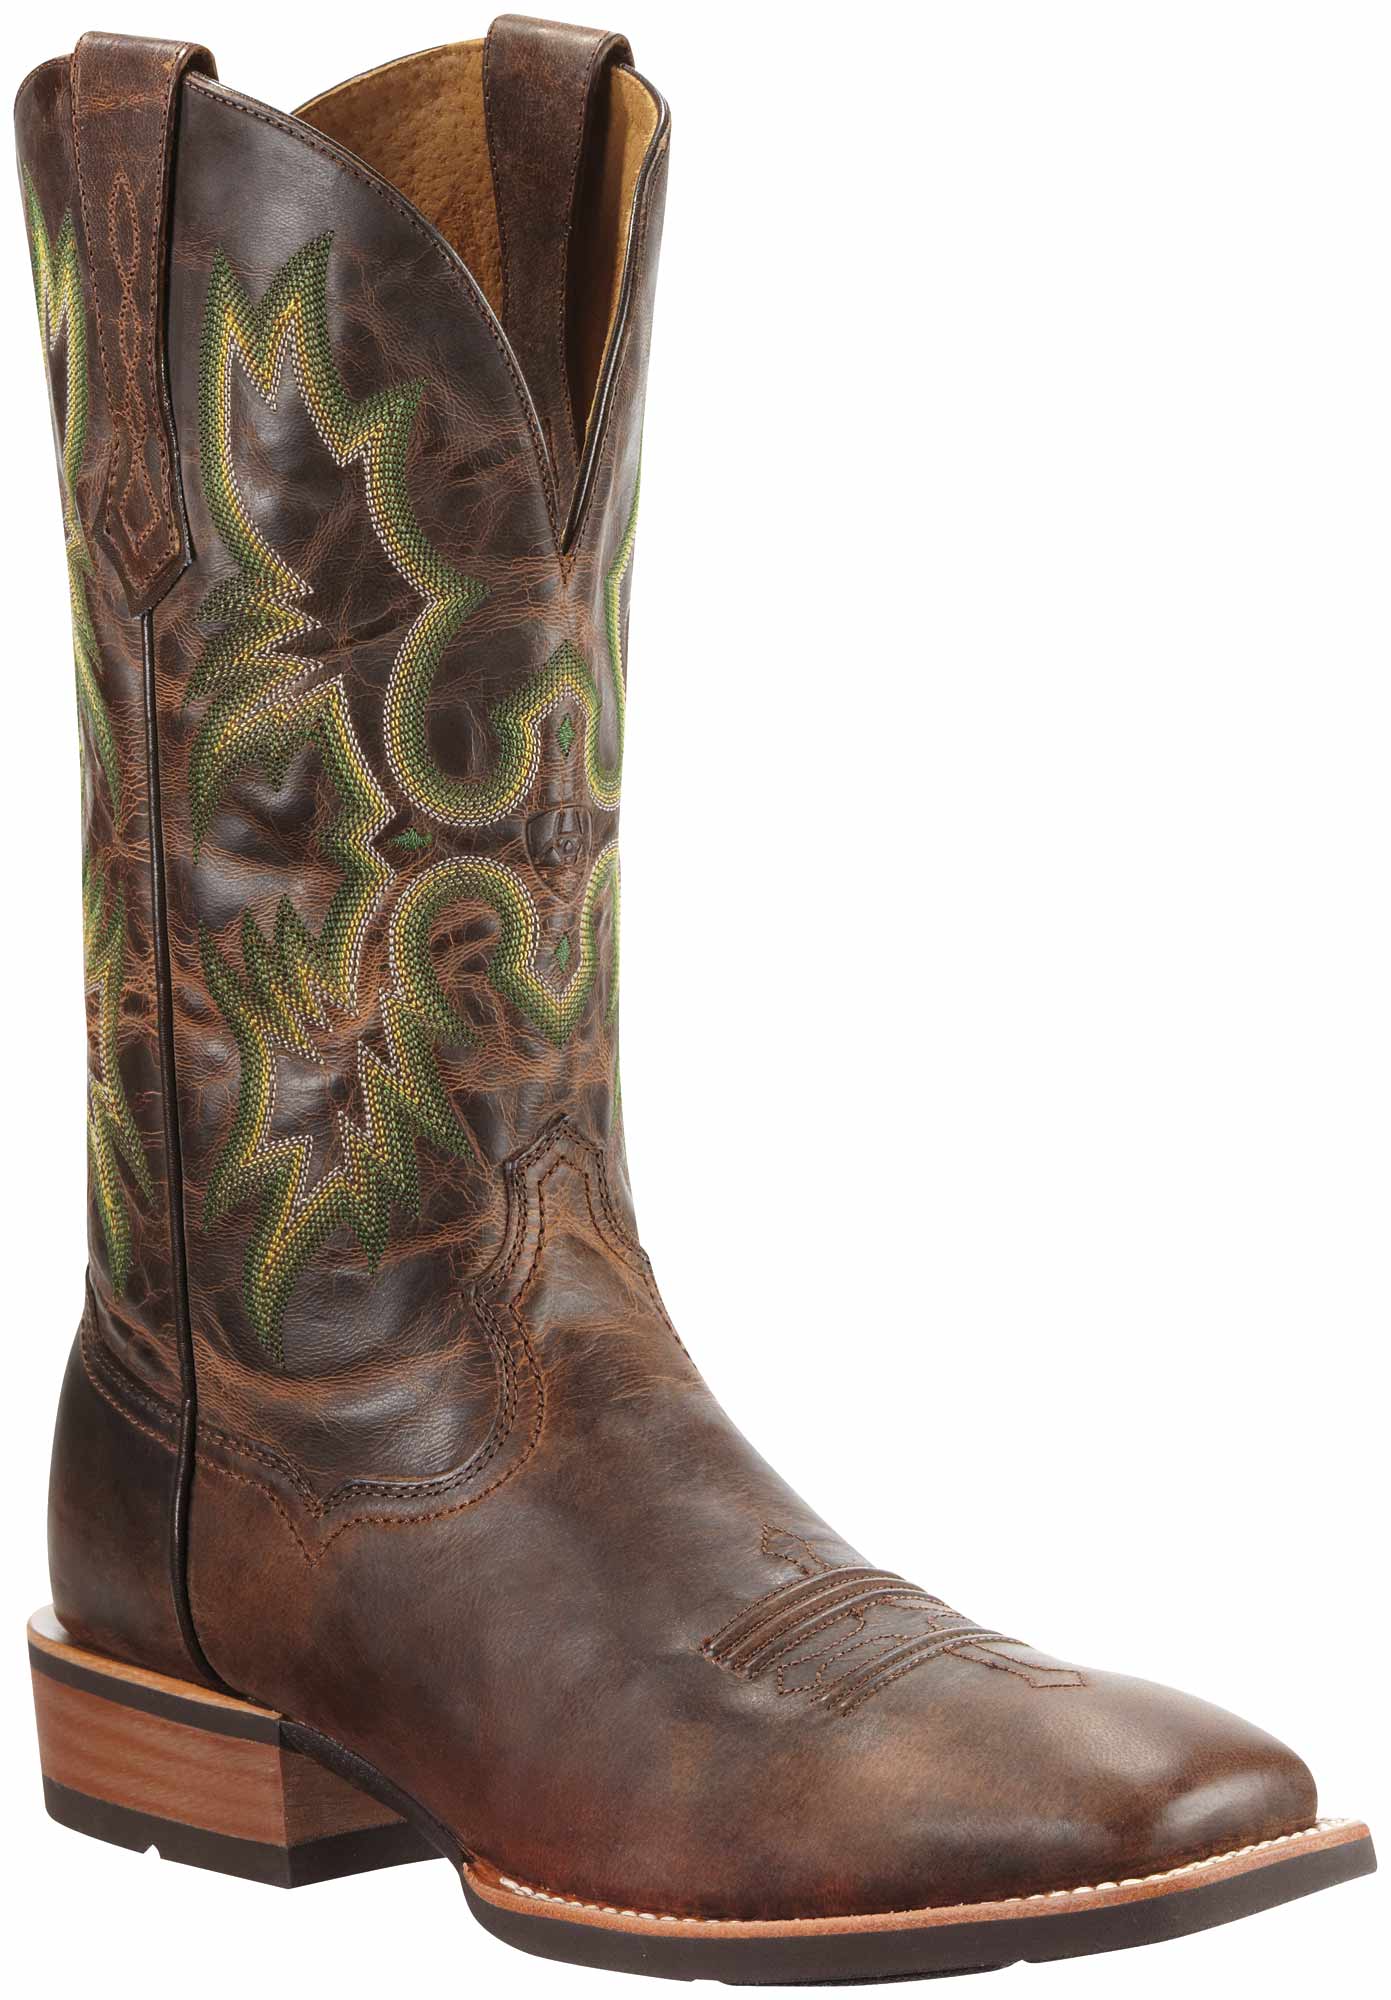 cowboy boot stitching designs